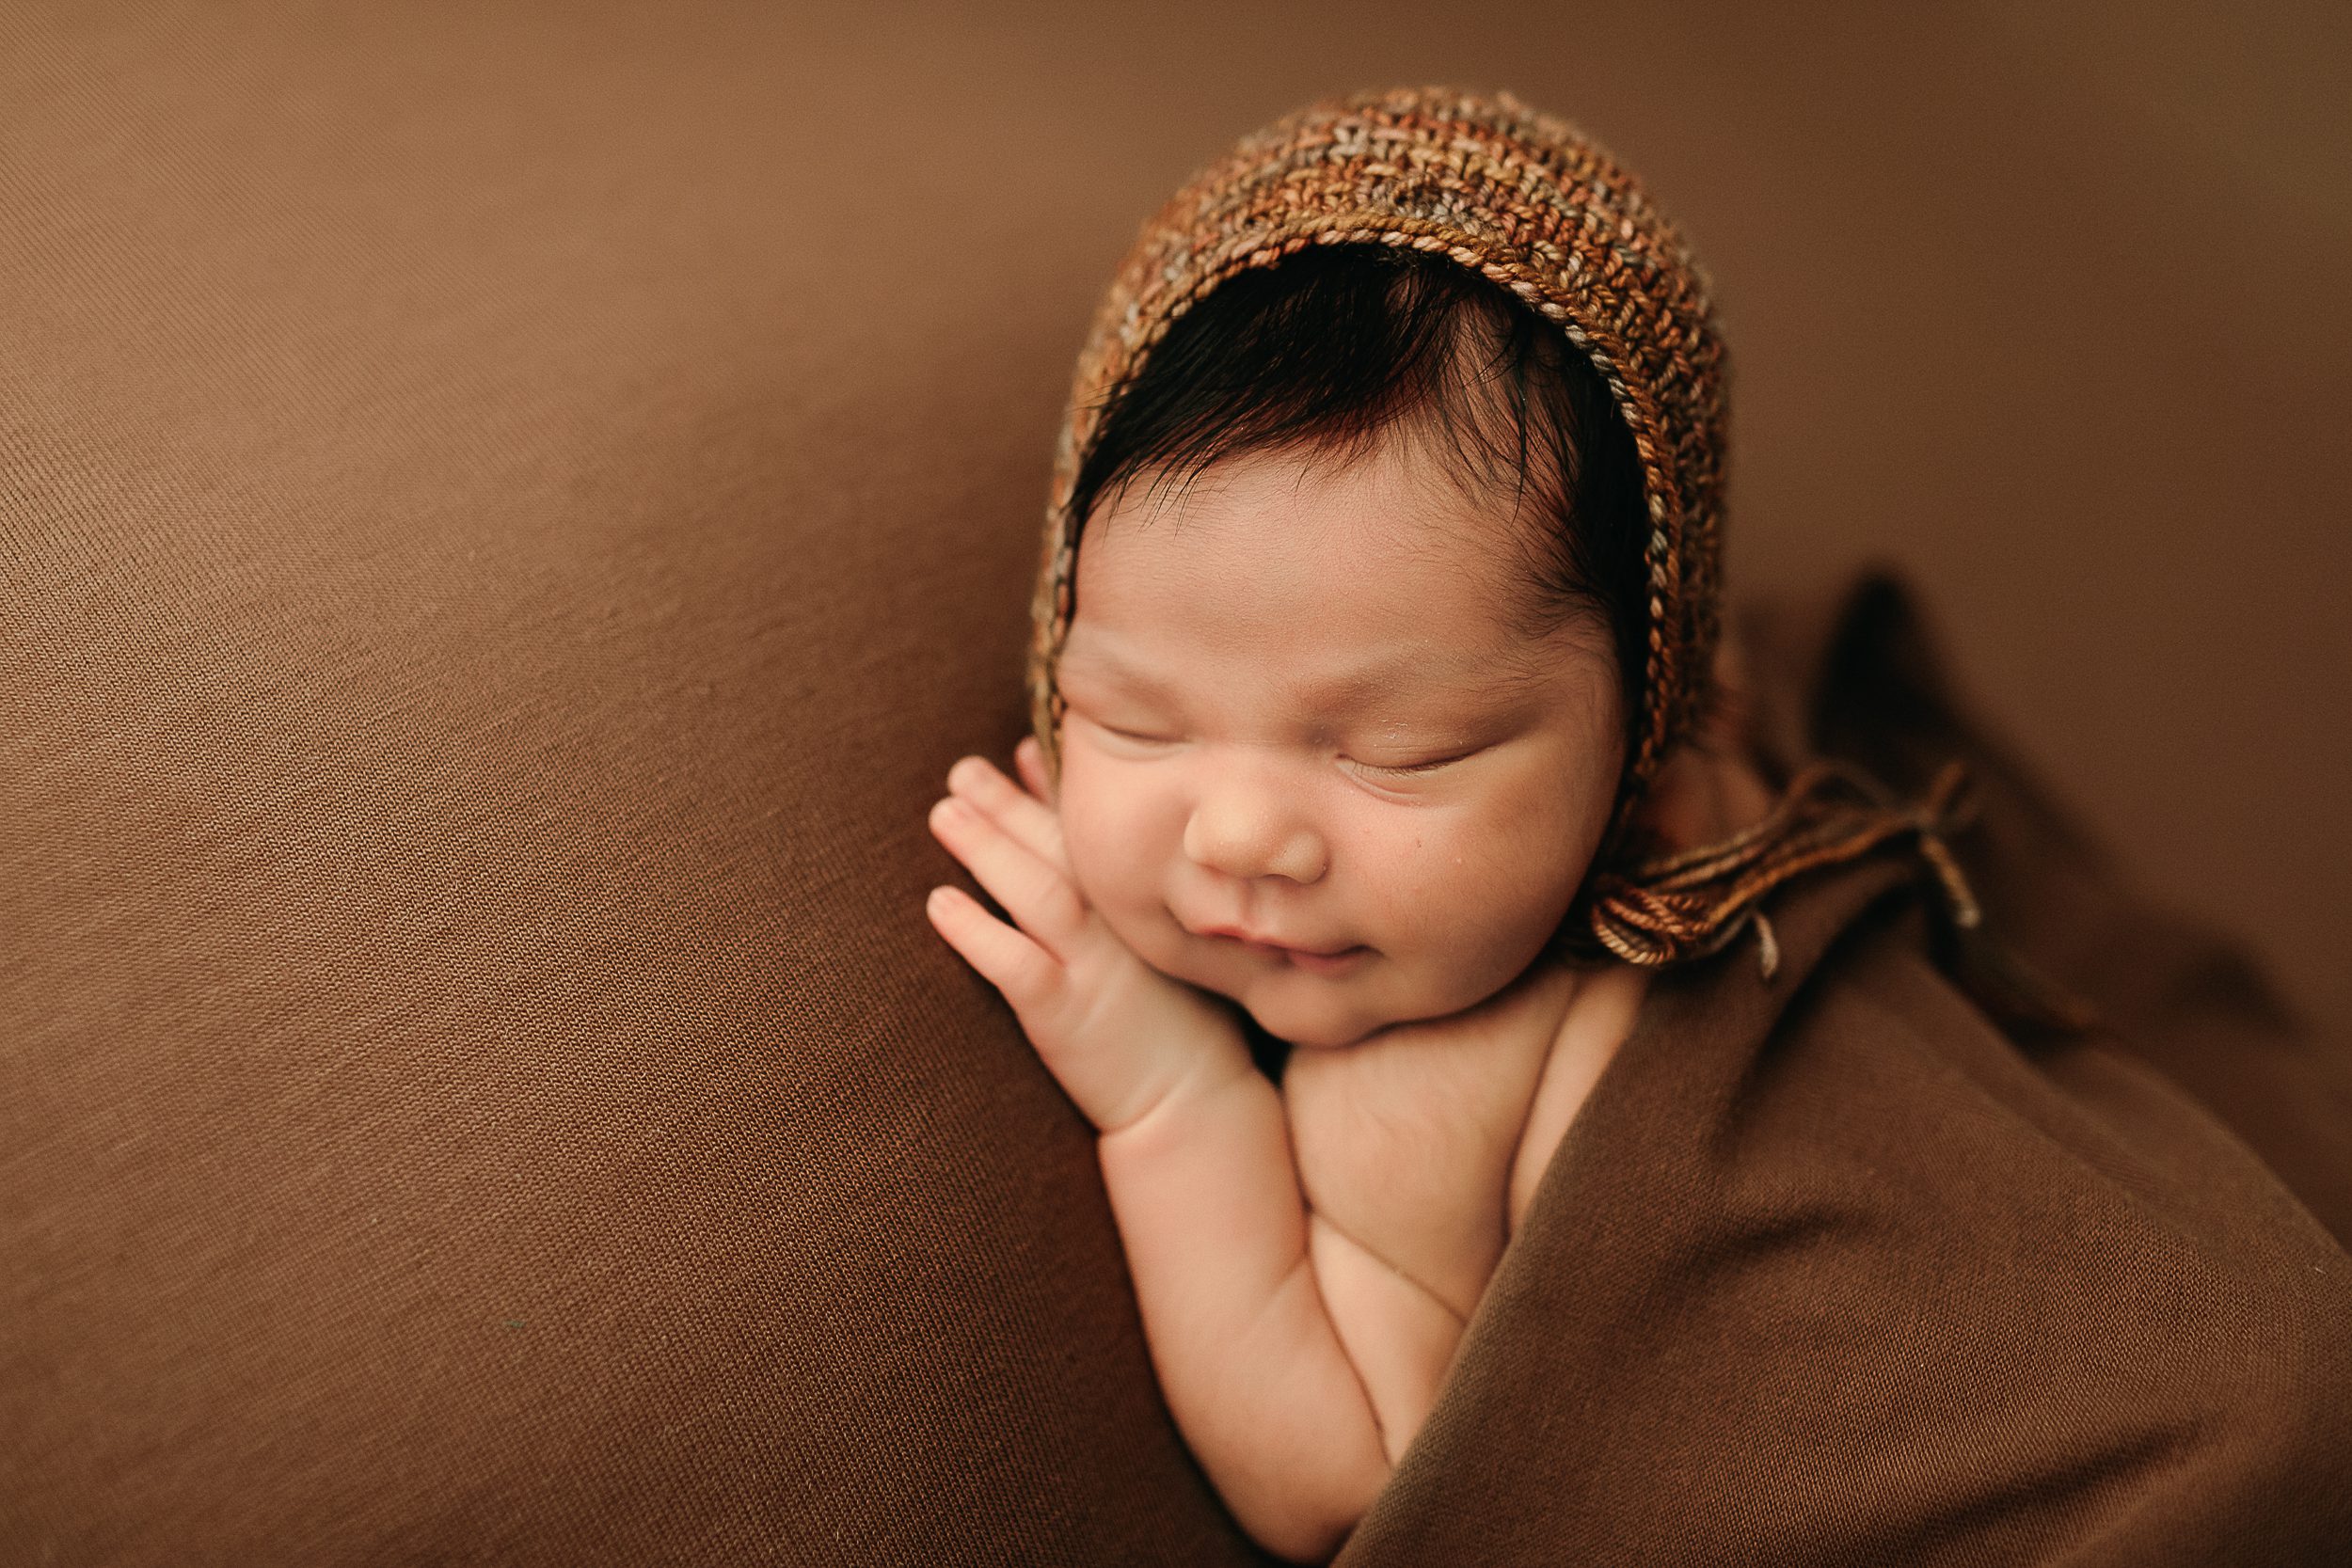 newborn baby born wearling a bonnet on a brown backdrop.